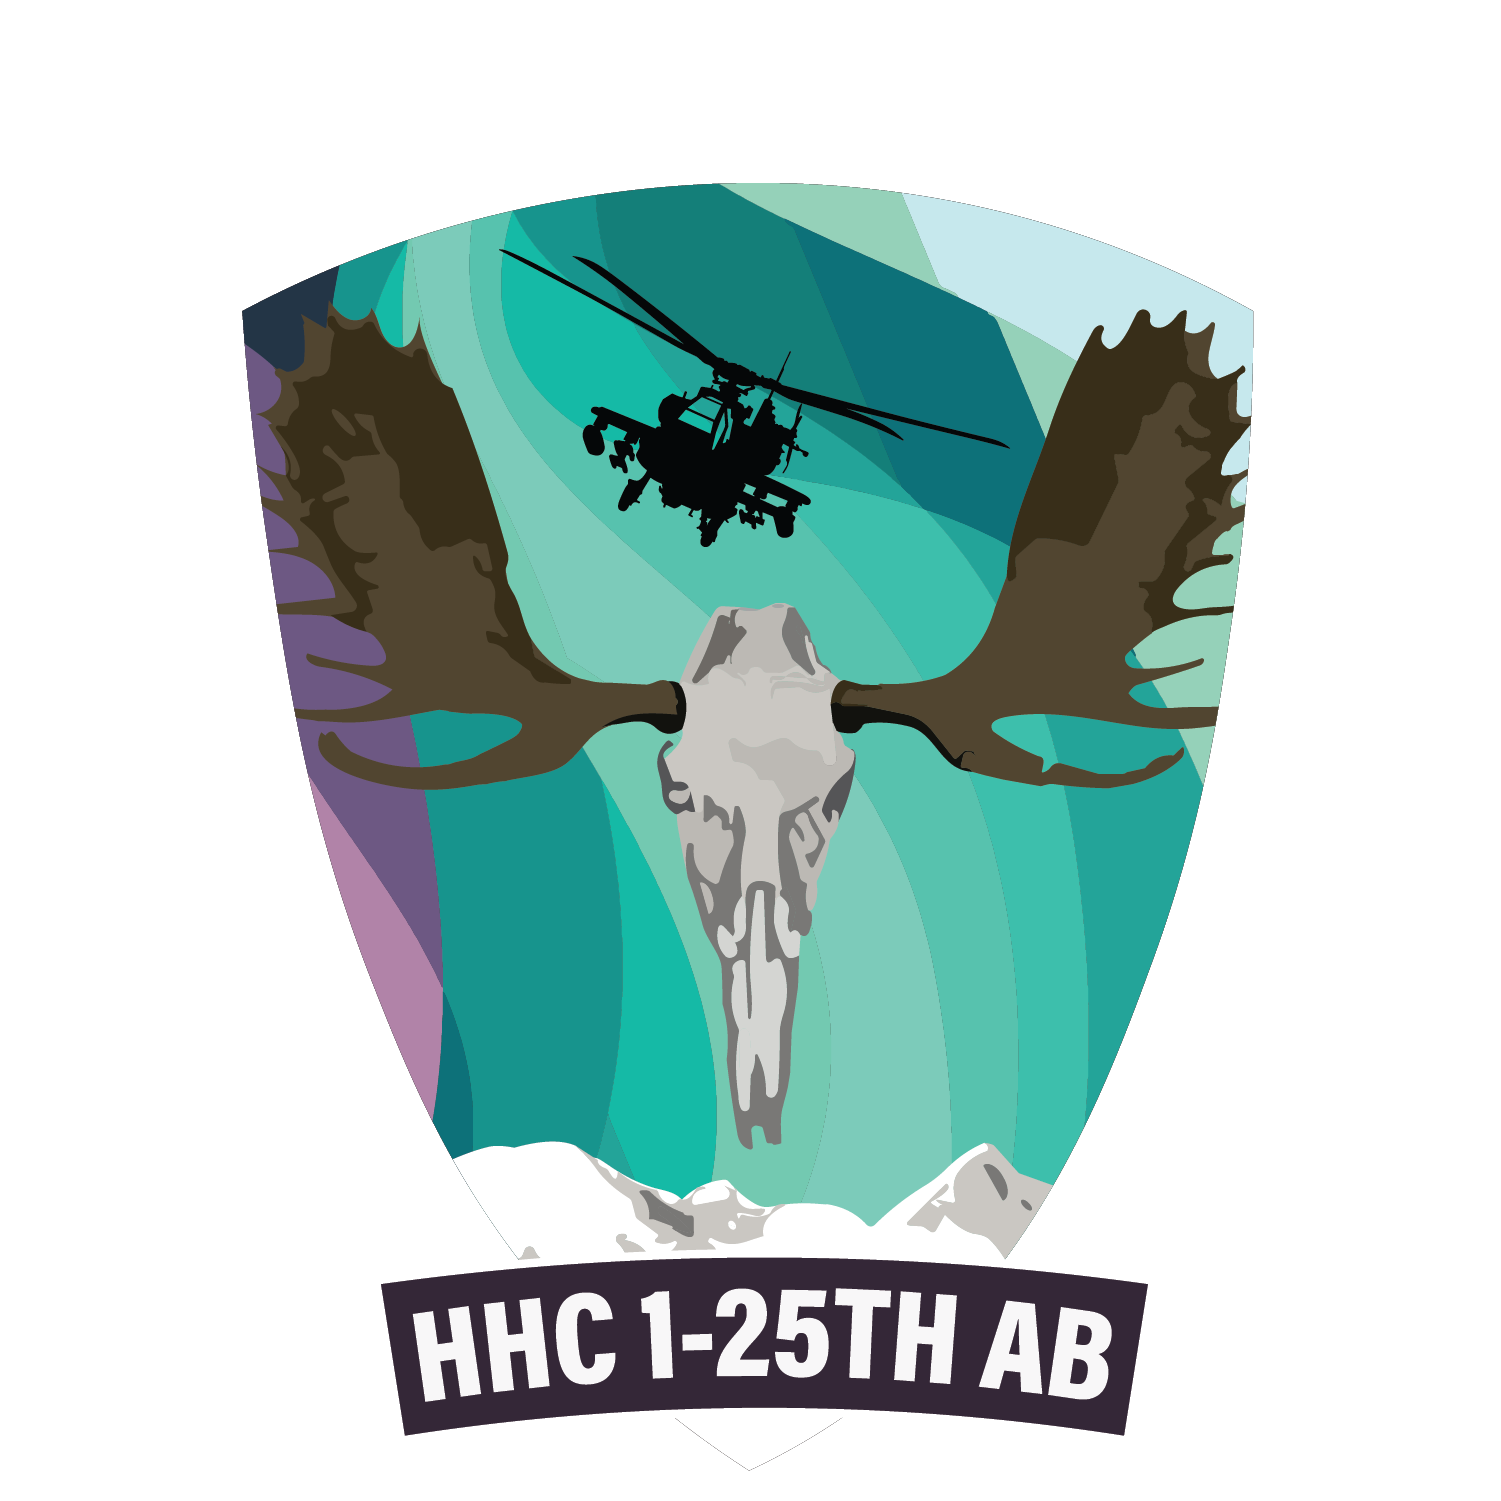 HHC 1-25 "Headhunters"